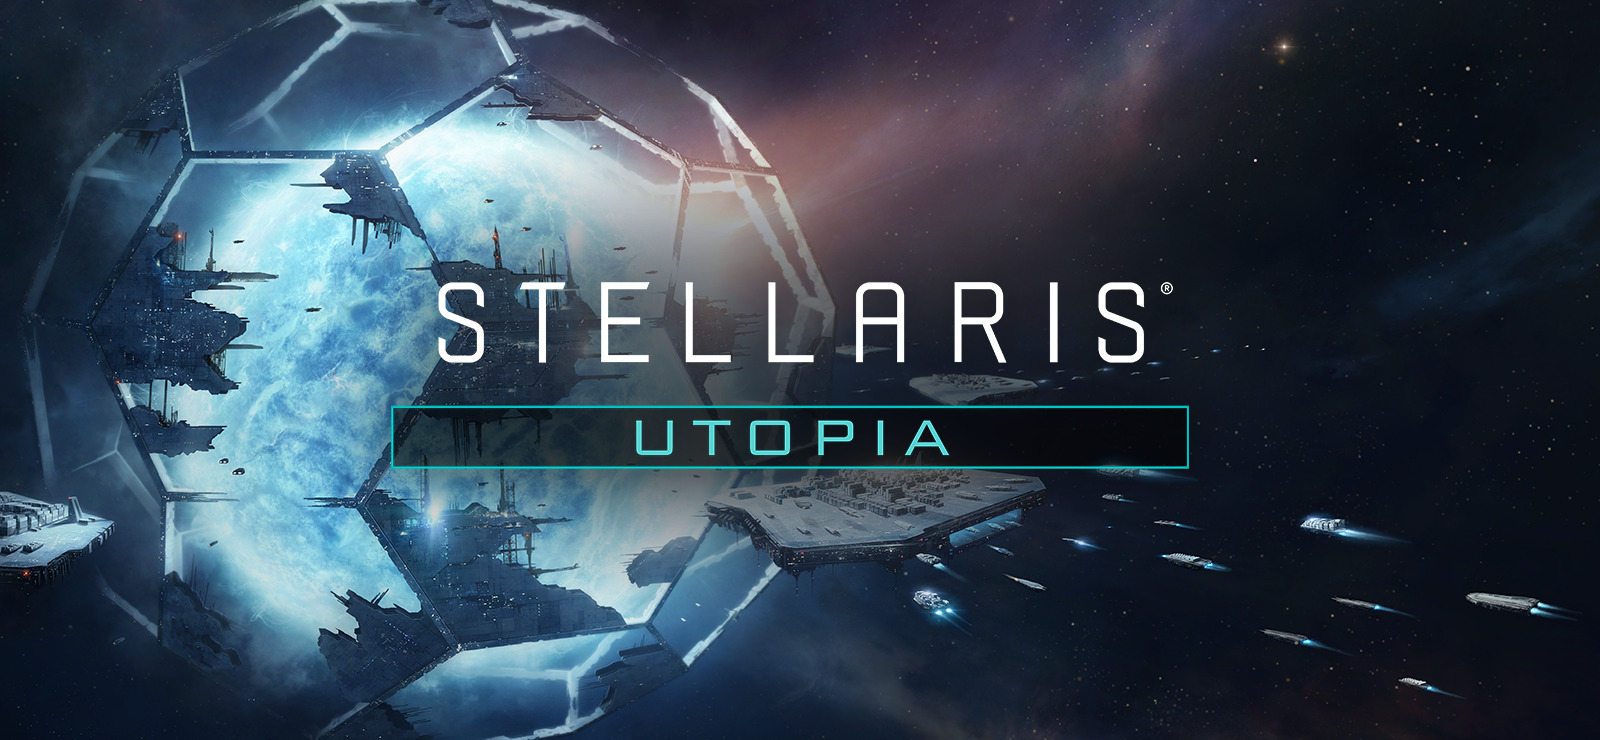 Stellaris: Utopia review